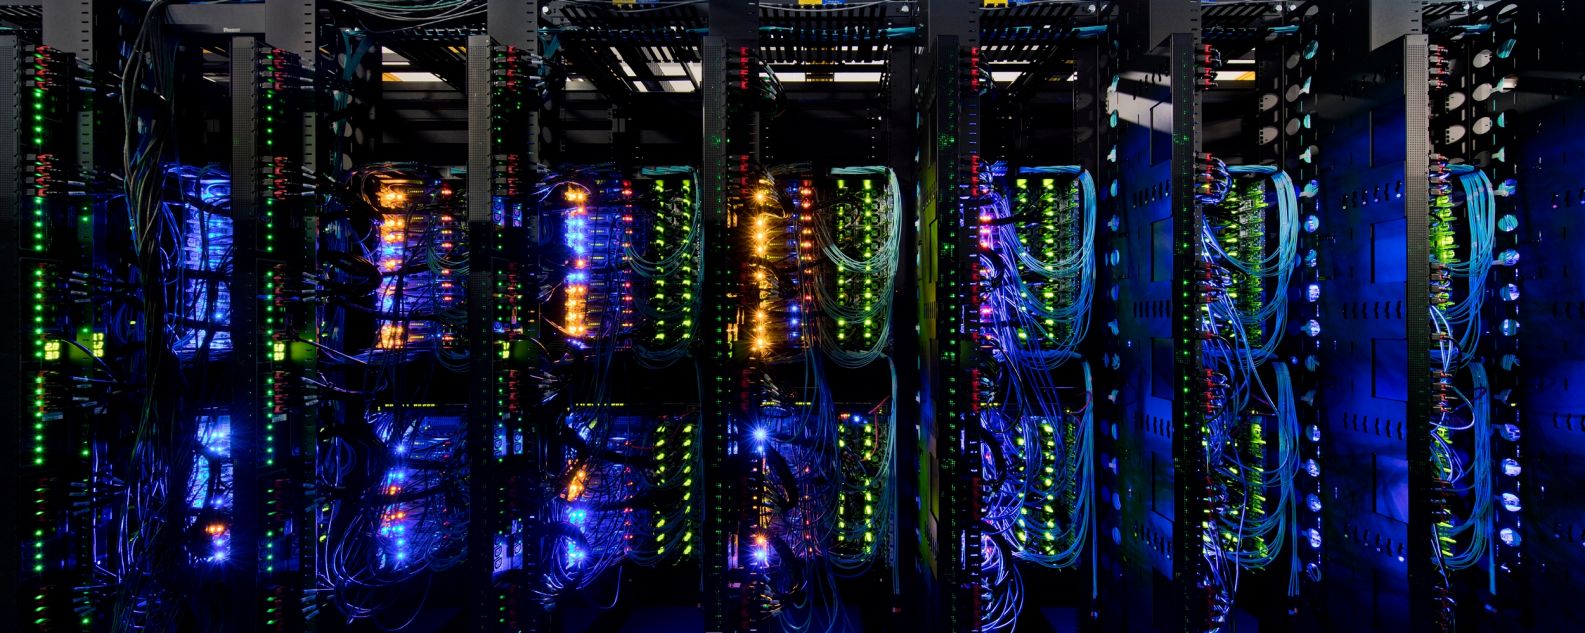 kumpulan server komputer